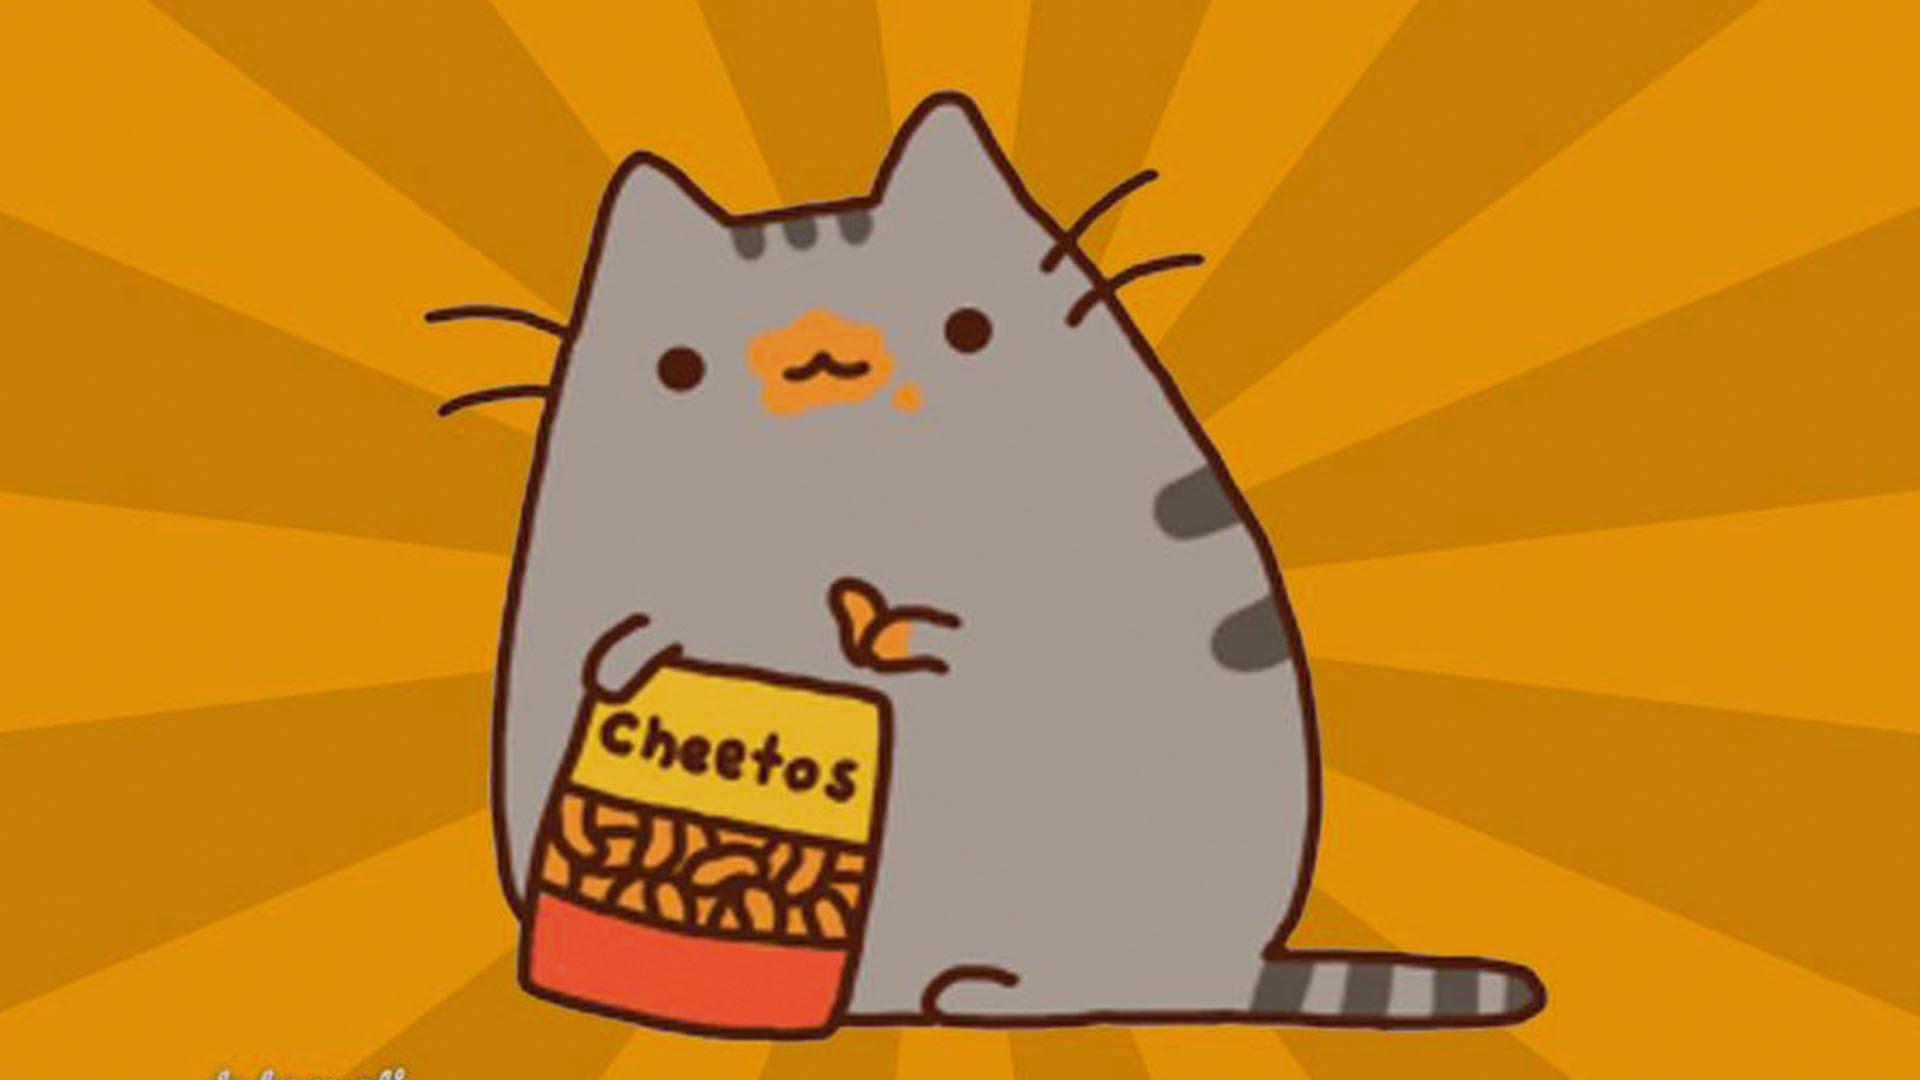 Cheetos Wallpaper Image